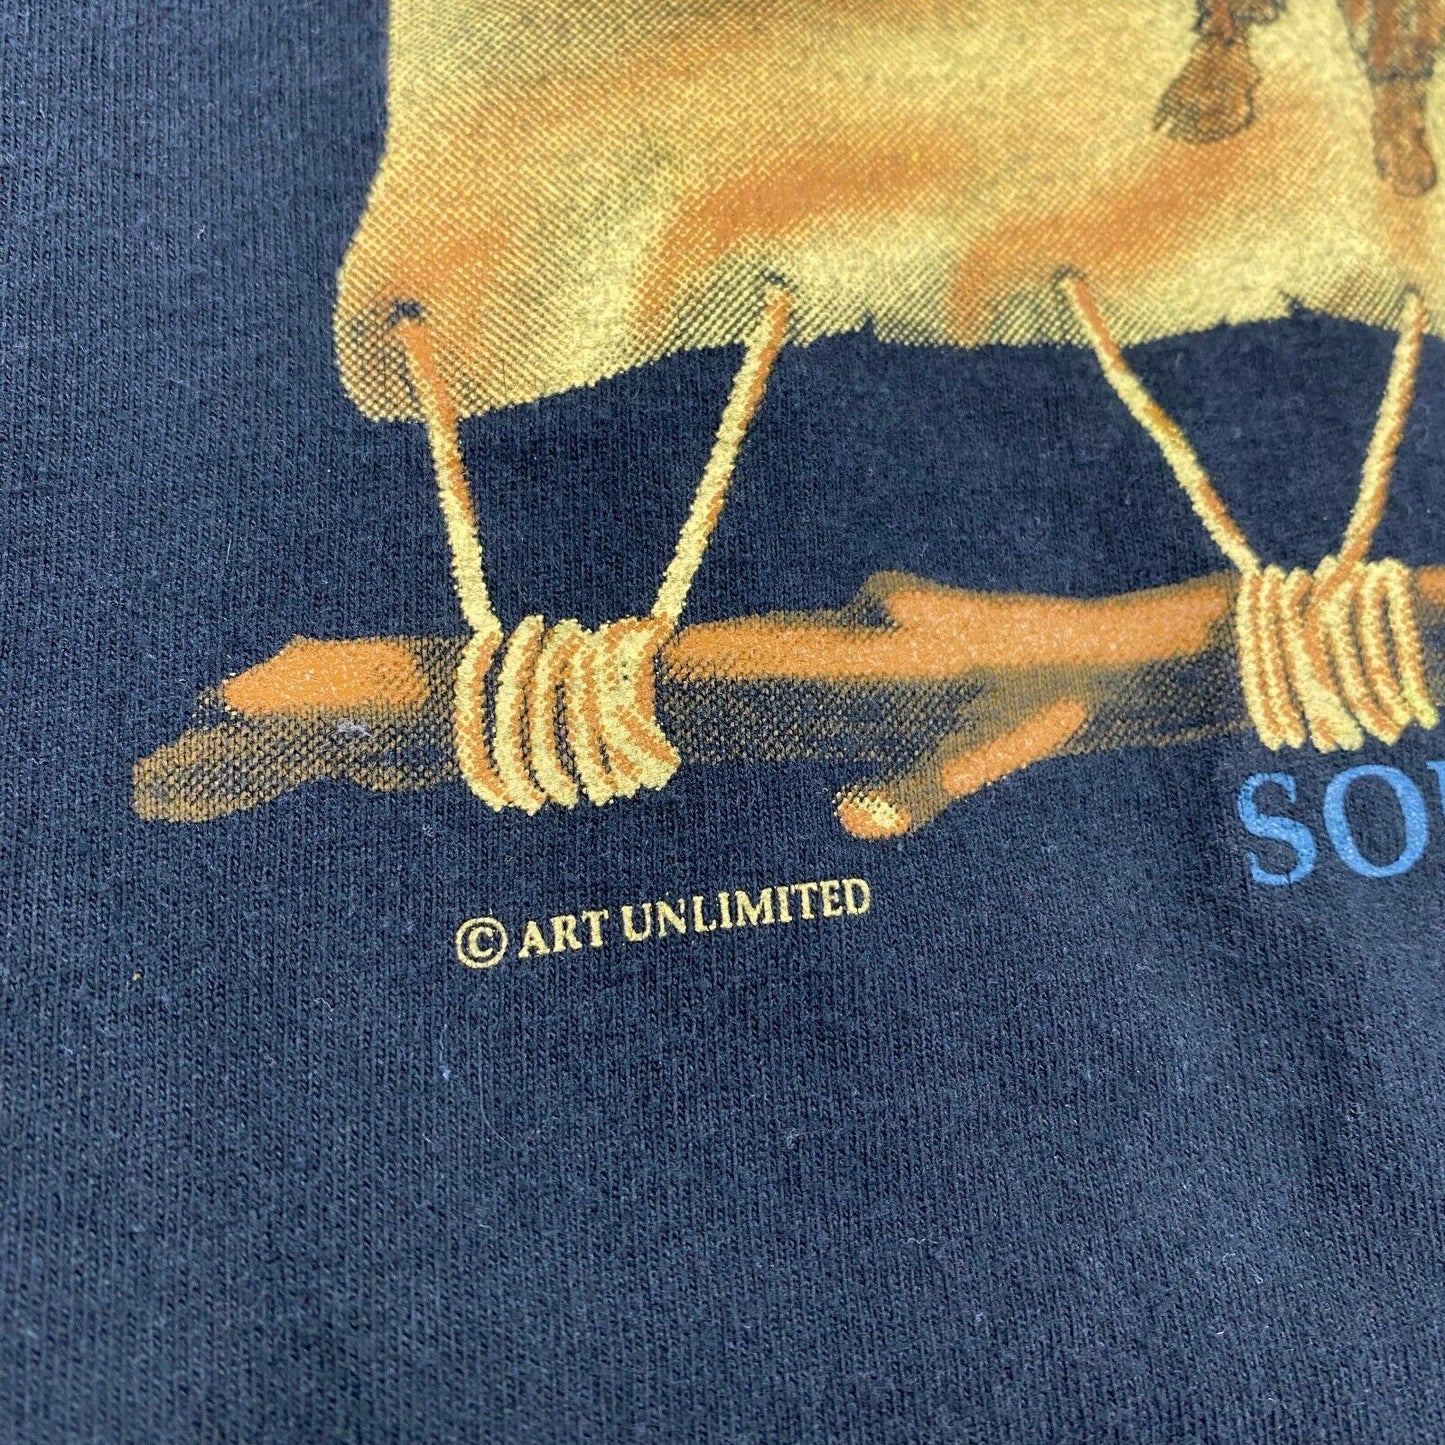 VINTAGE 90s Art Unlimited South Dakota All Over Print T-Shirt sz Medium Men